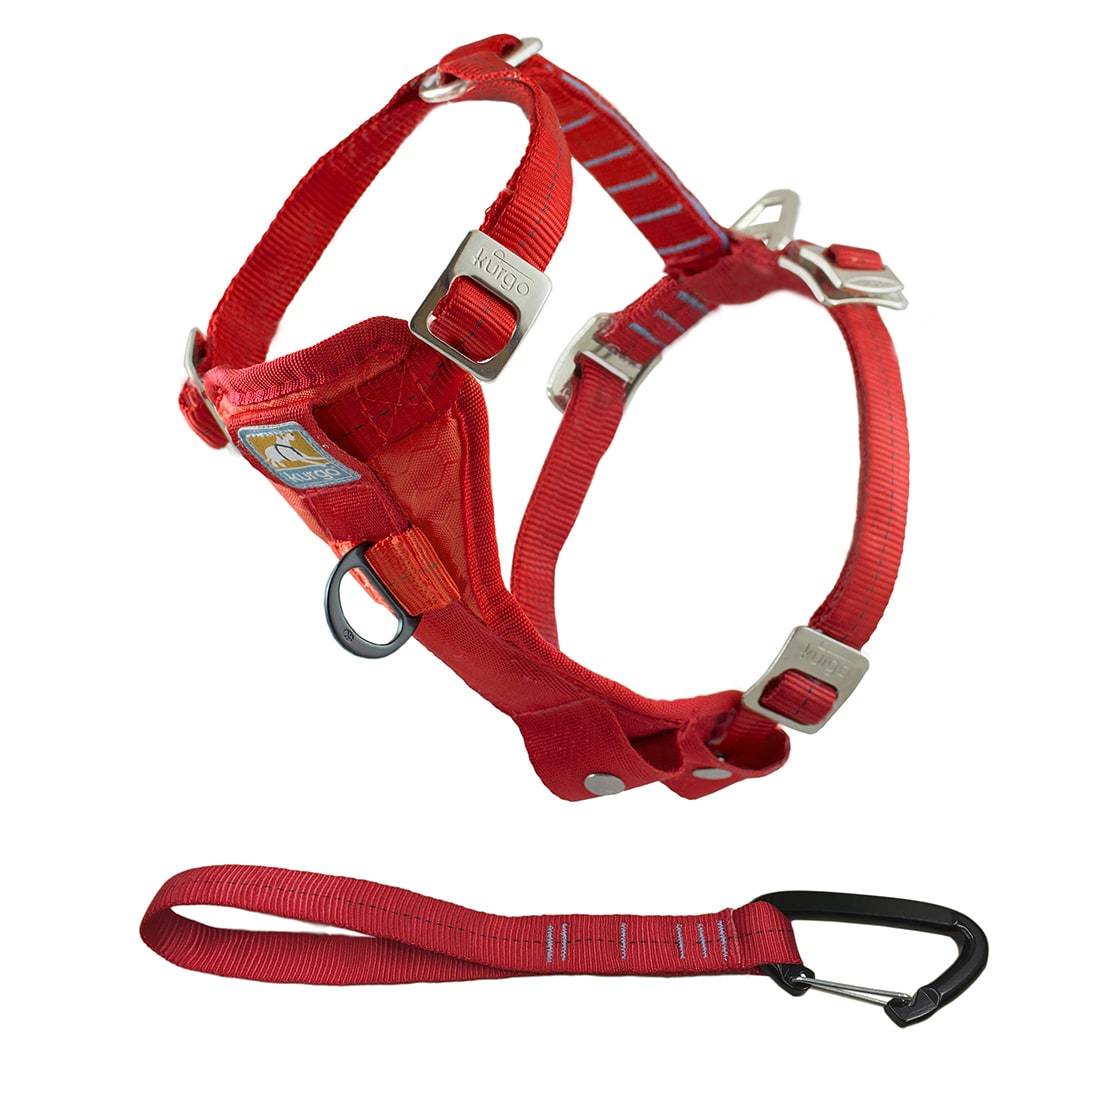 Red Enhanced Strength Trufit Dog Harness